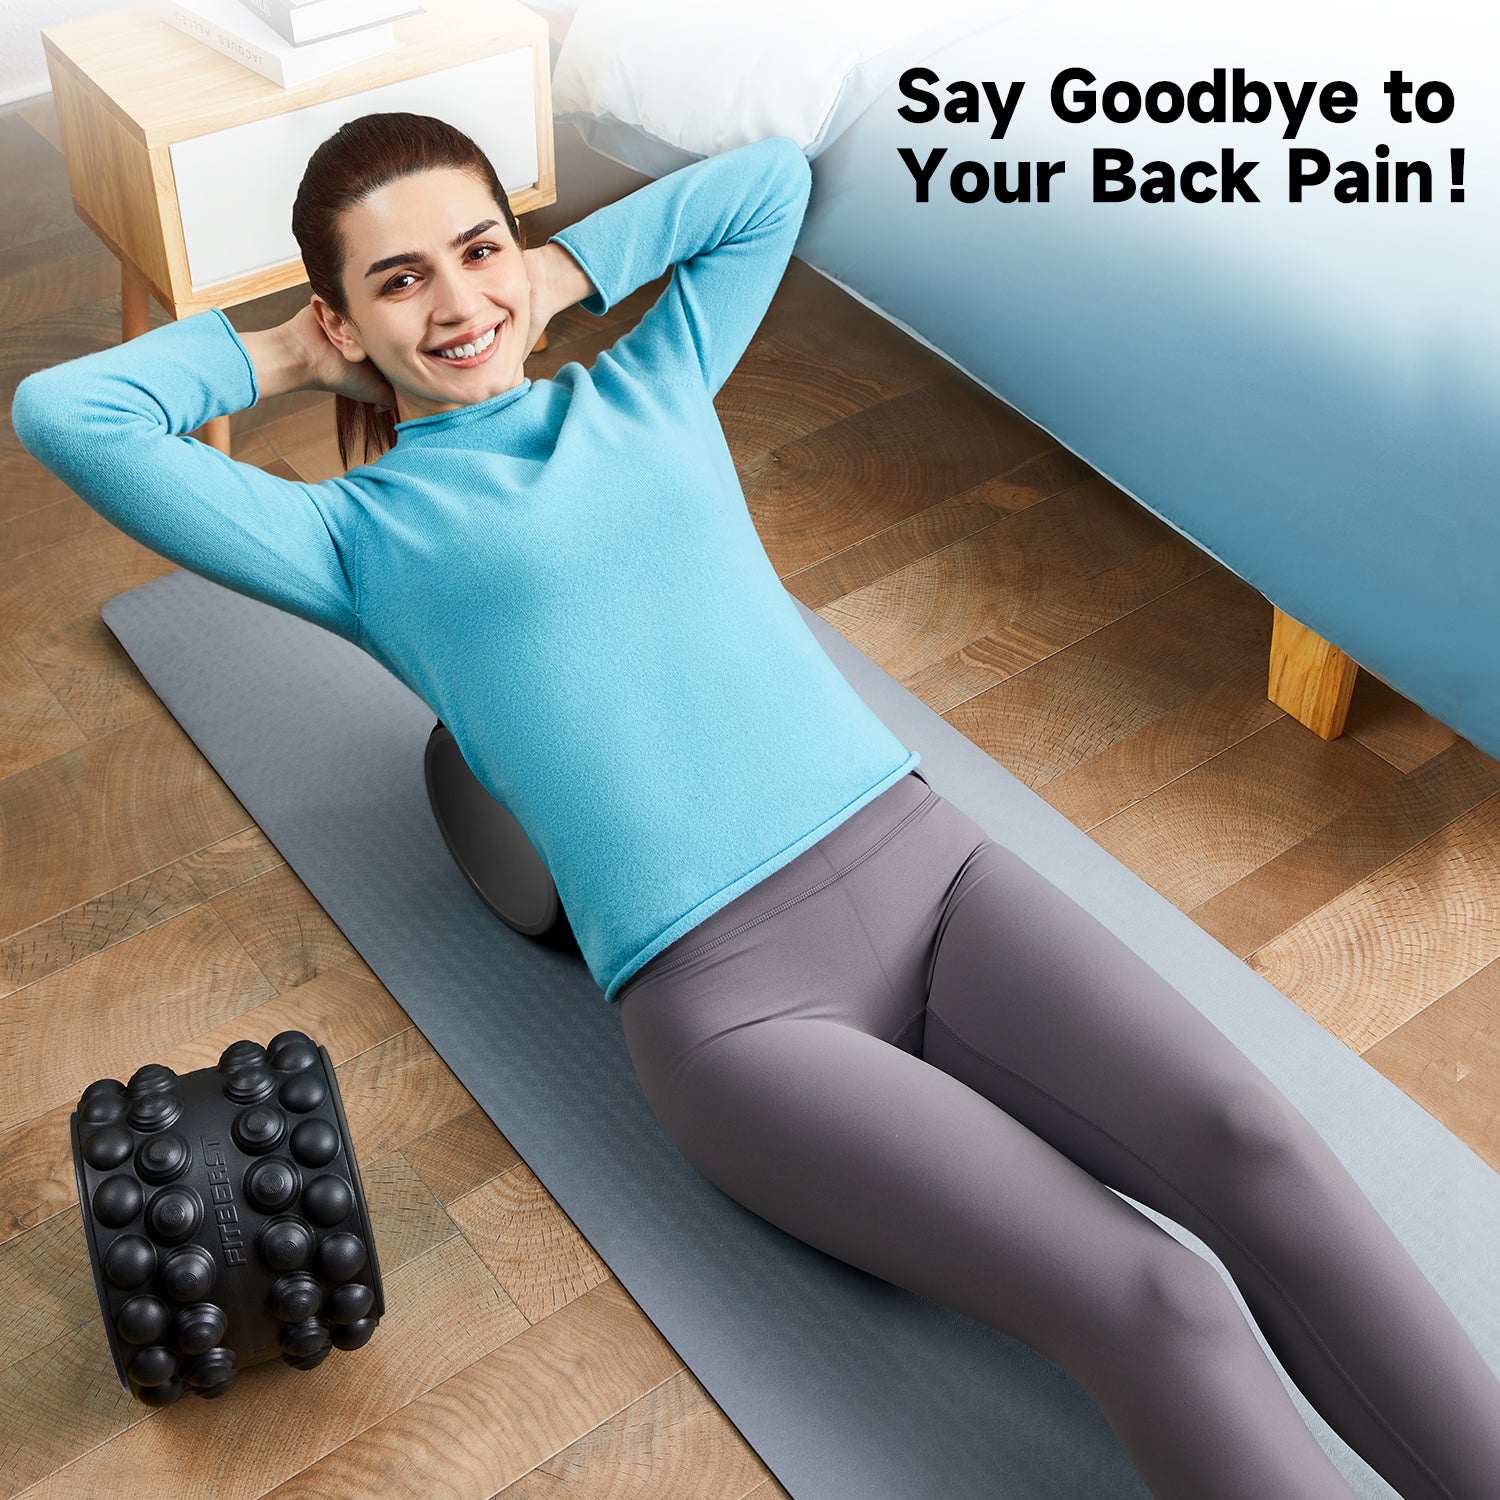 FitBeast G2 Back Roller - Back Wheel for Deep Tissue Massage (9'', Blu